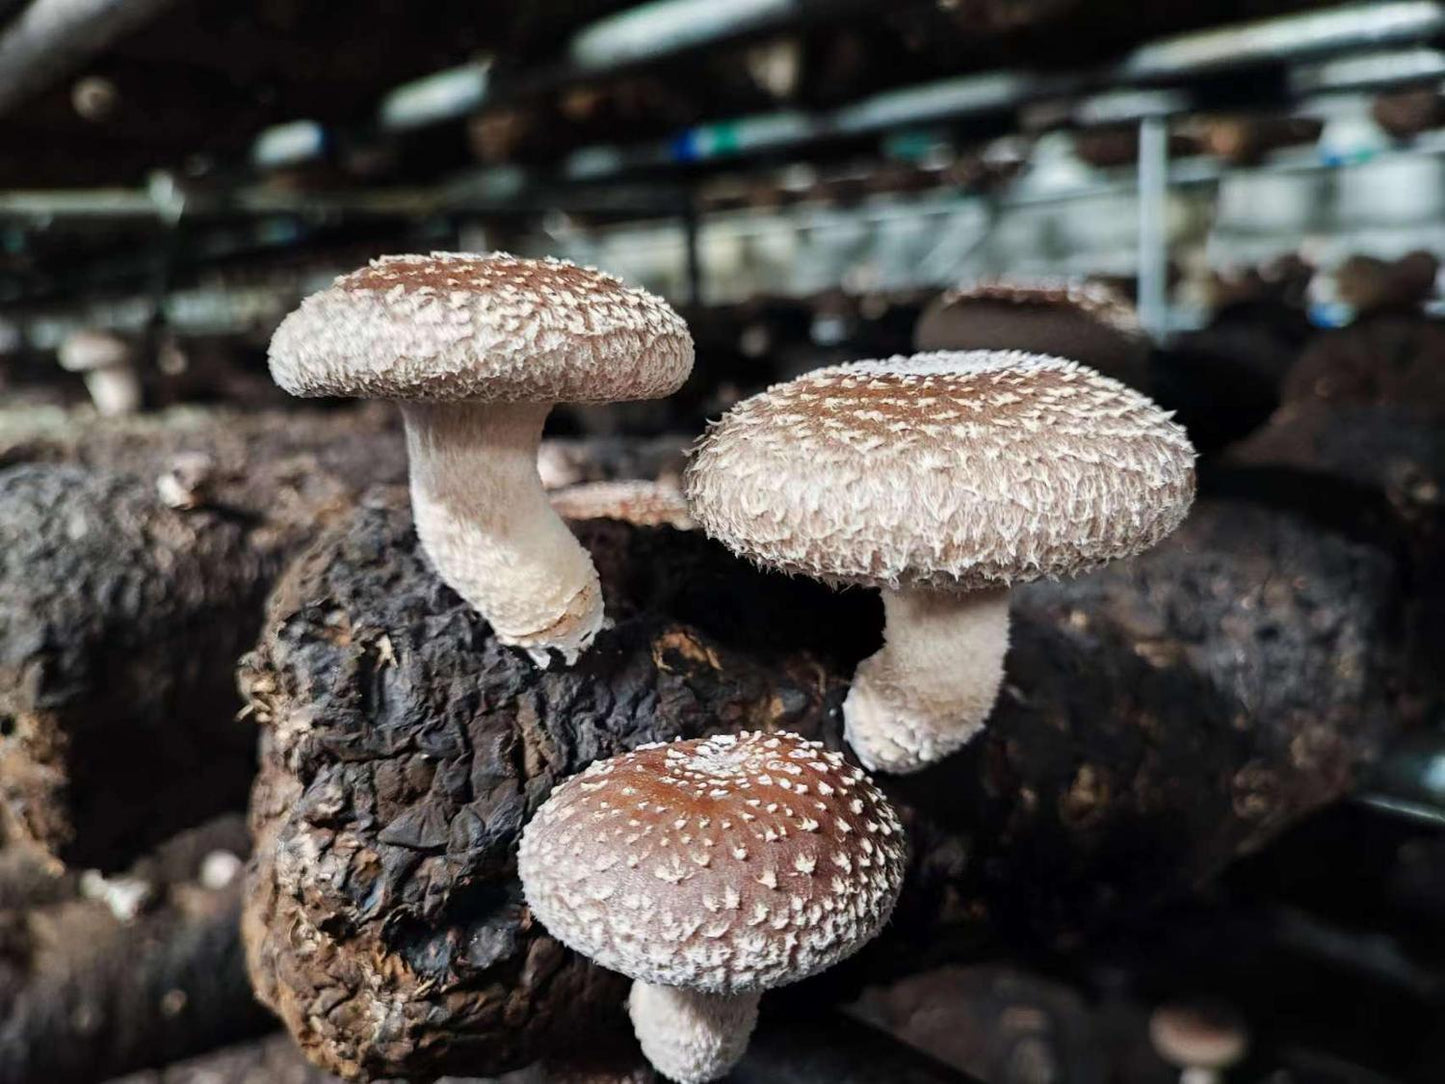 Mushroom kit, an organic shiitake mushroom growing kit